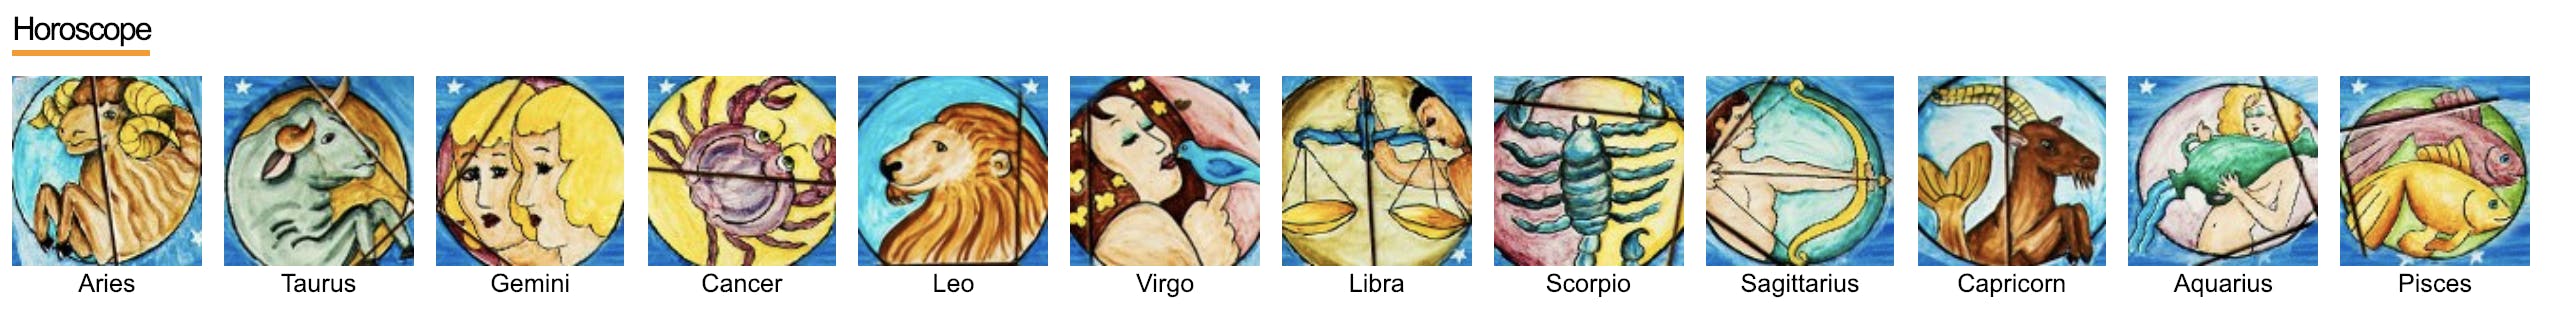 vedic astrology reading